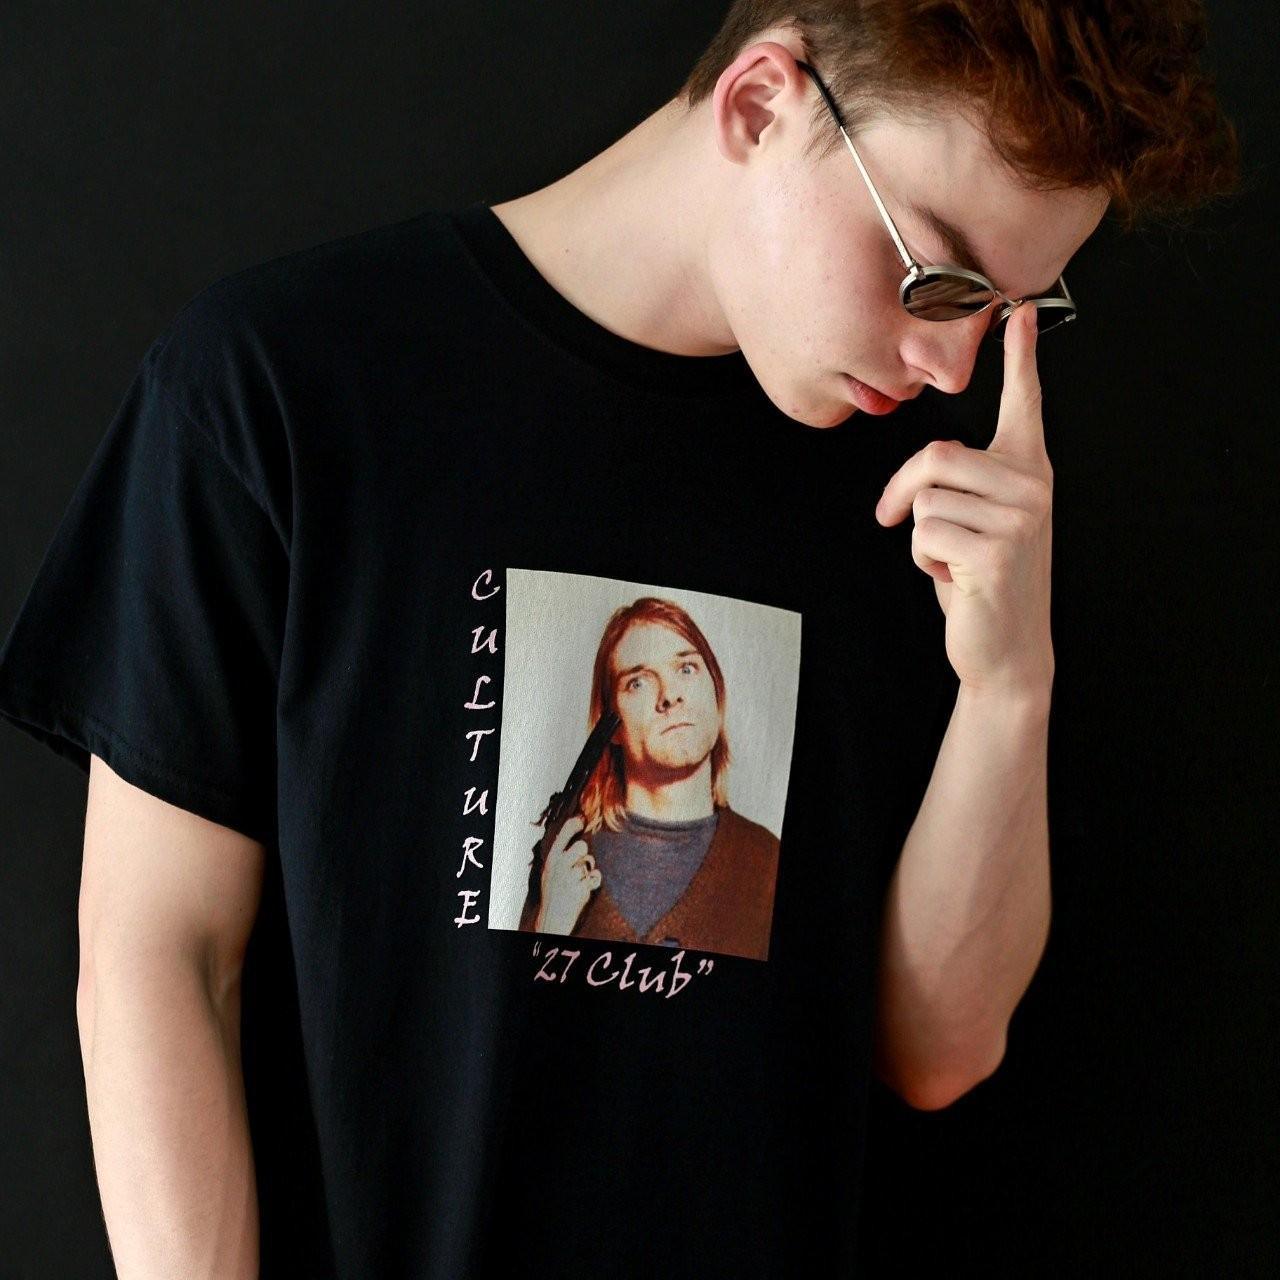 Kurt Cobain T-Shirt - Poet Archives